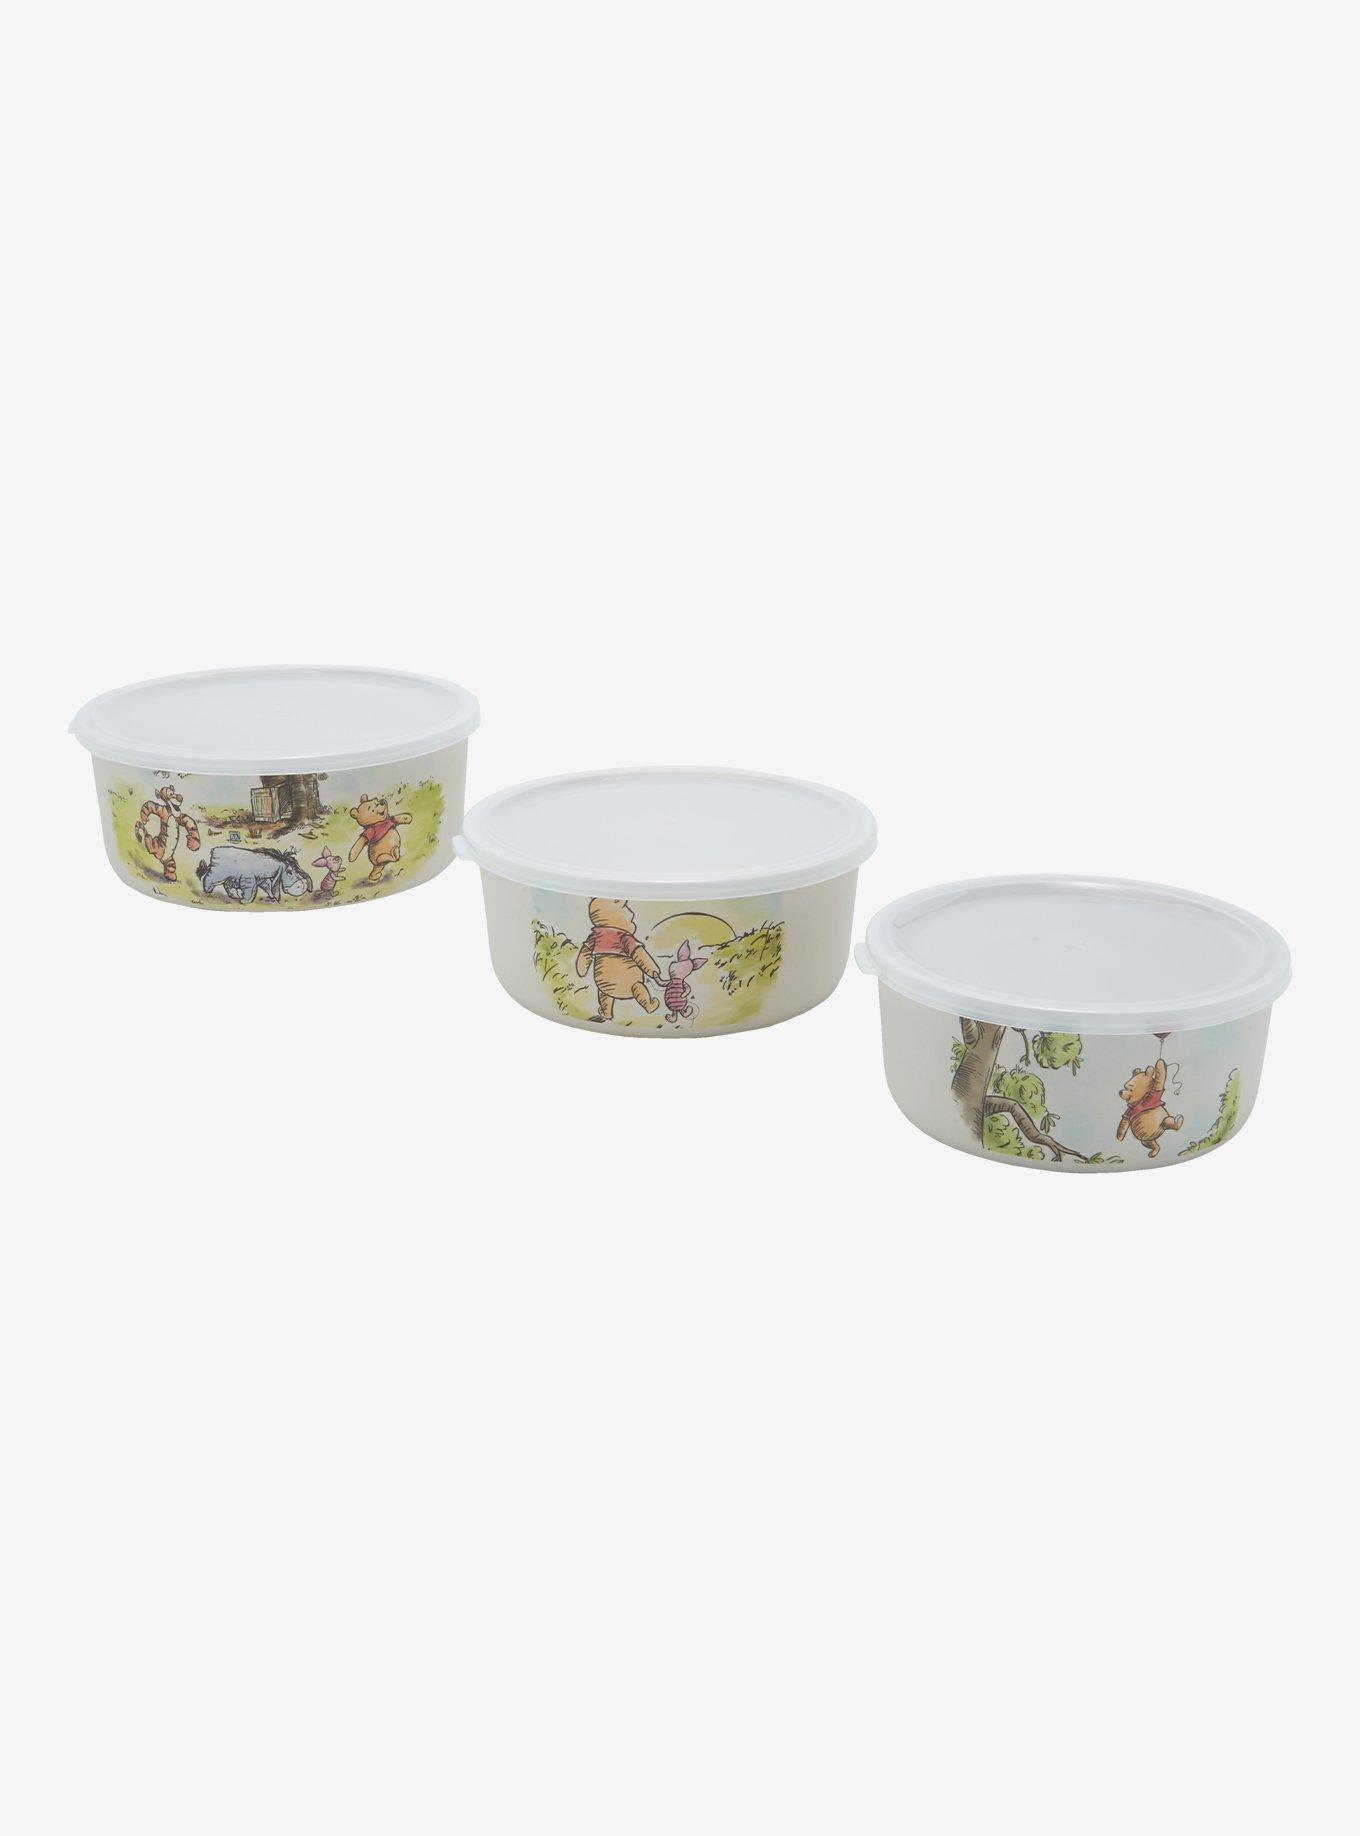 Disney Winnie the Pooh Ceramic Food Storage Bowl Container Vented